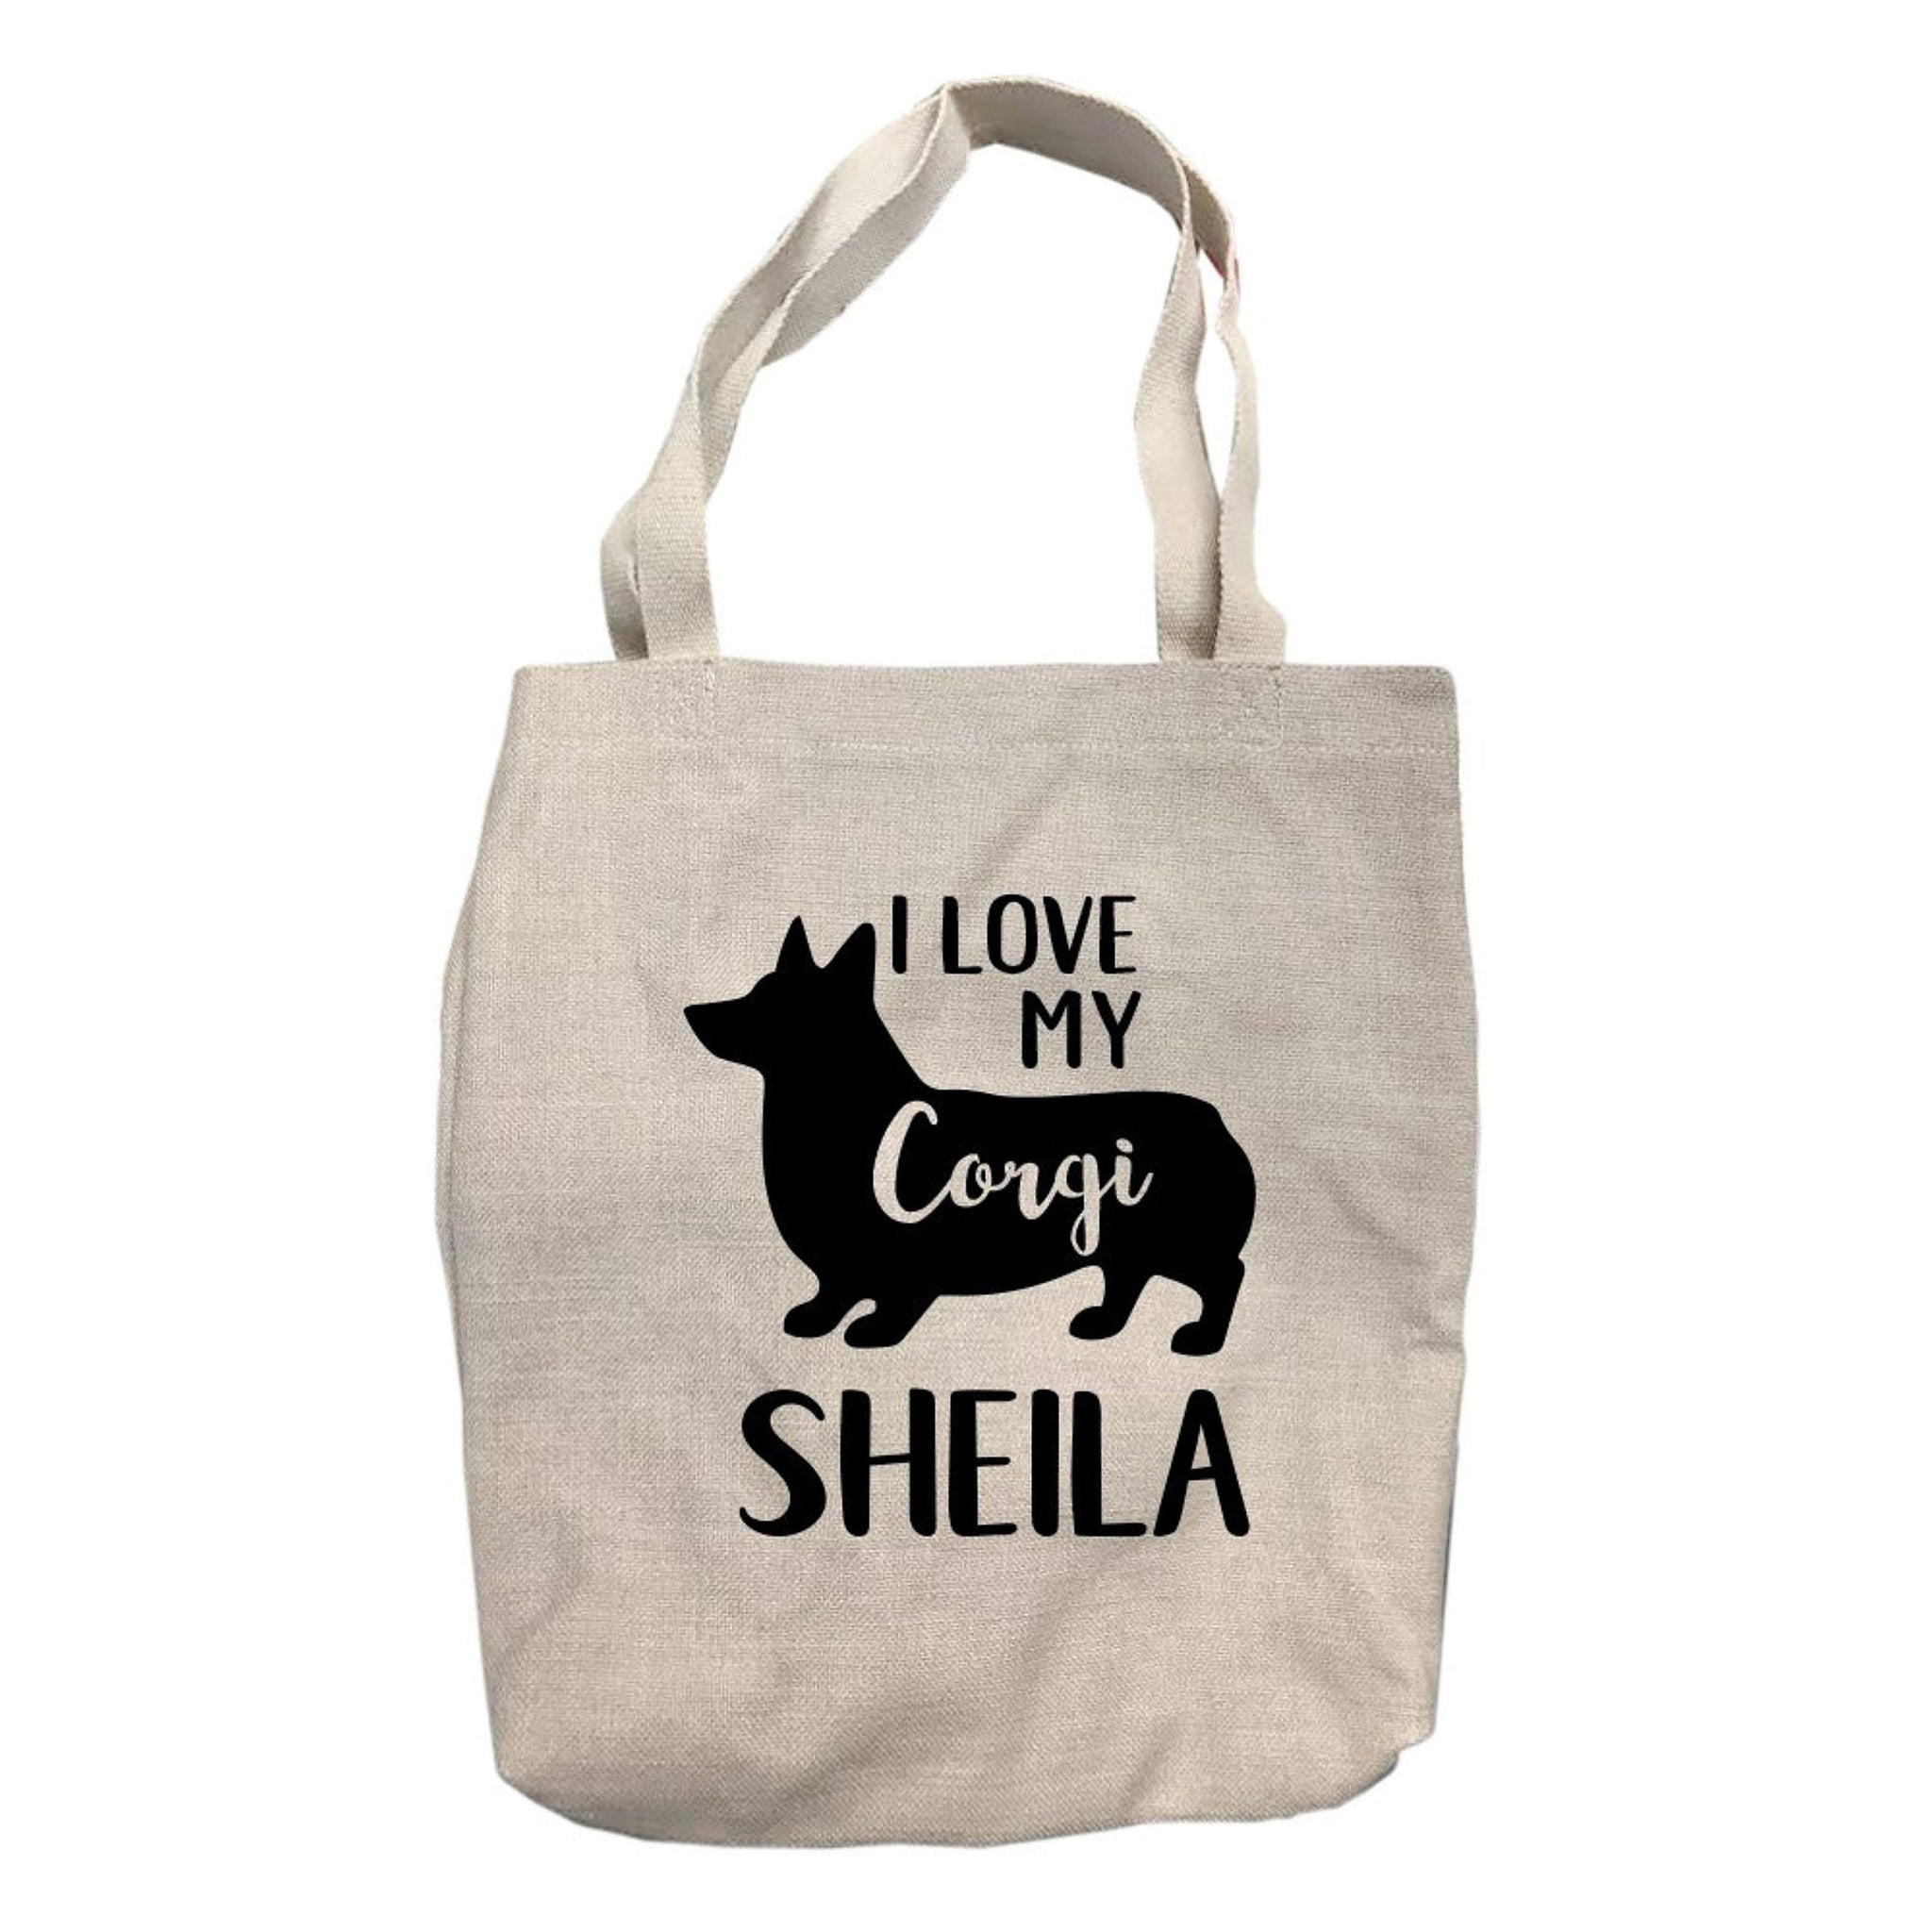 Personalized I Love My Corgi Tote Bag